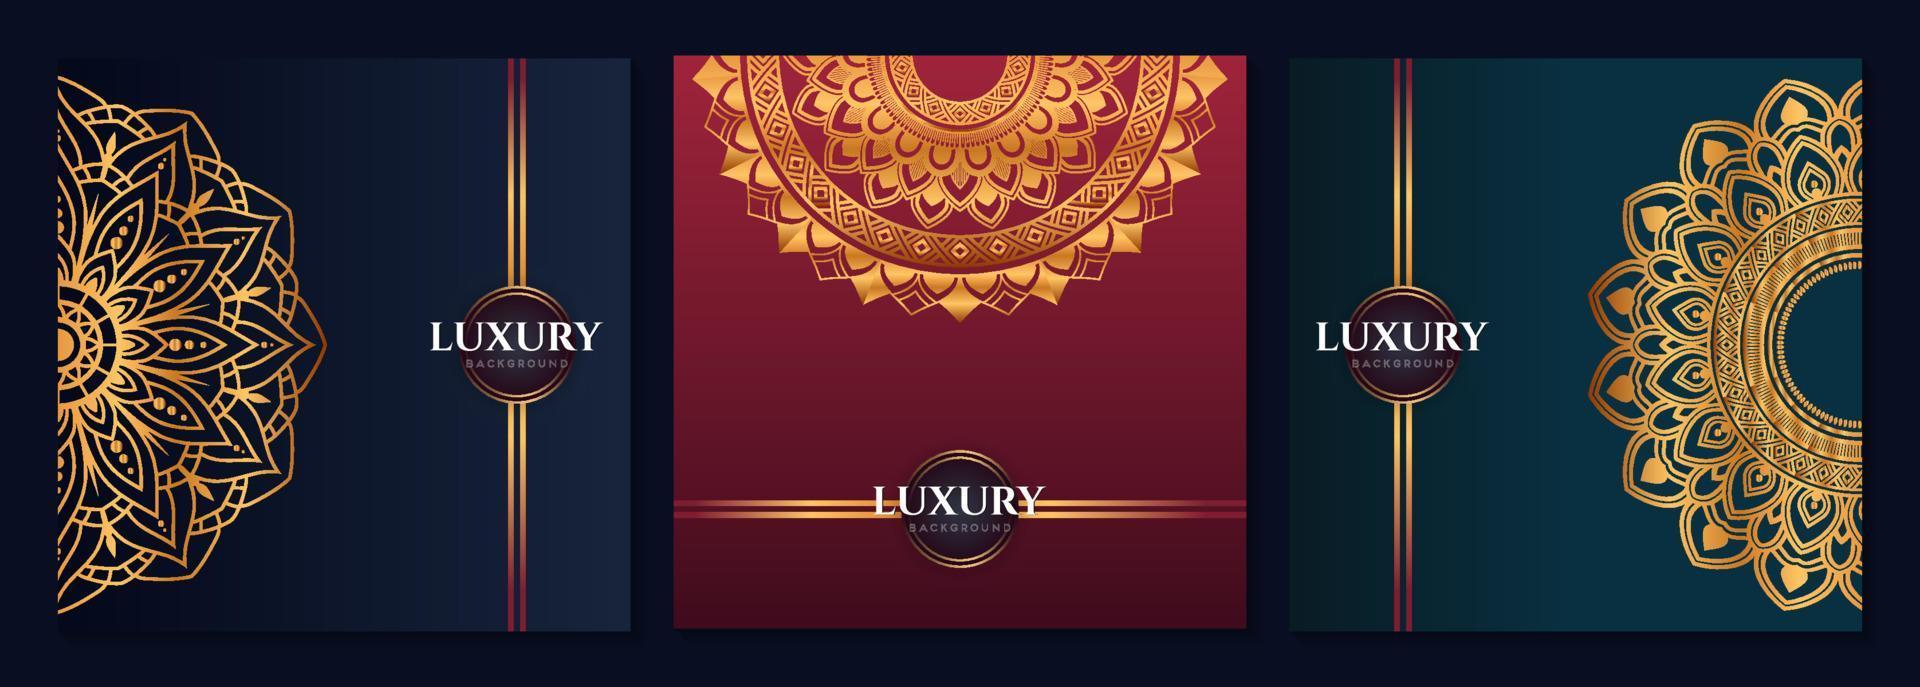 reeks van abstract goud luxe mandala achtergrond vector sjabloon, circulaire sier- arabesk patroon voor poster, omslag, brochure, folder. rood, groente, blauw achtergrond